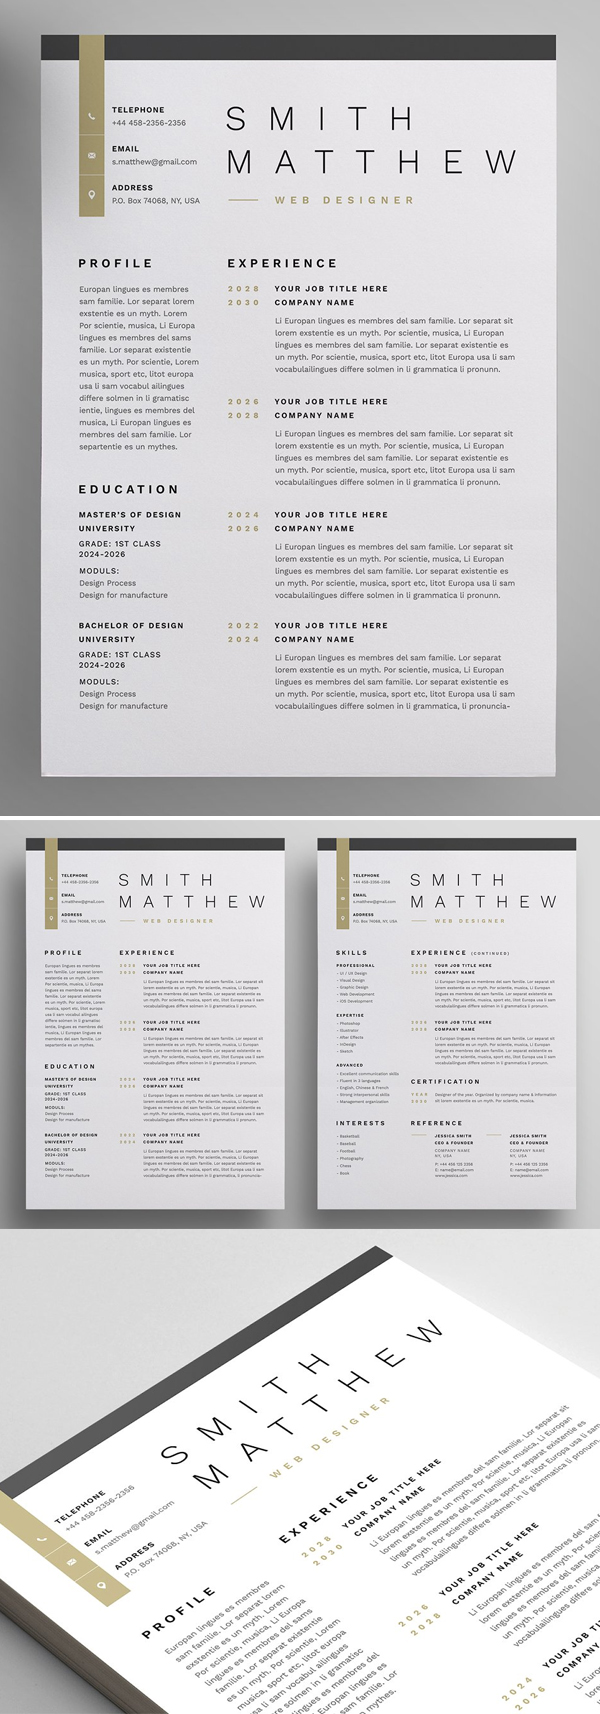 Resume and Letterhead Design